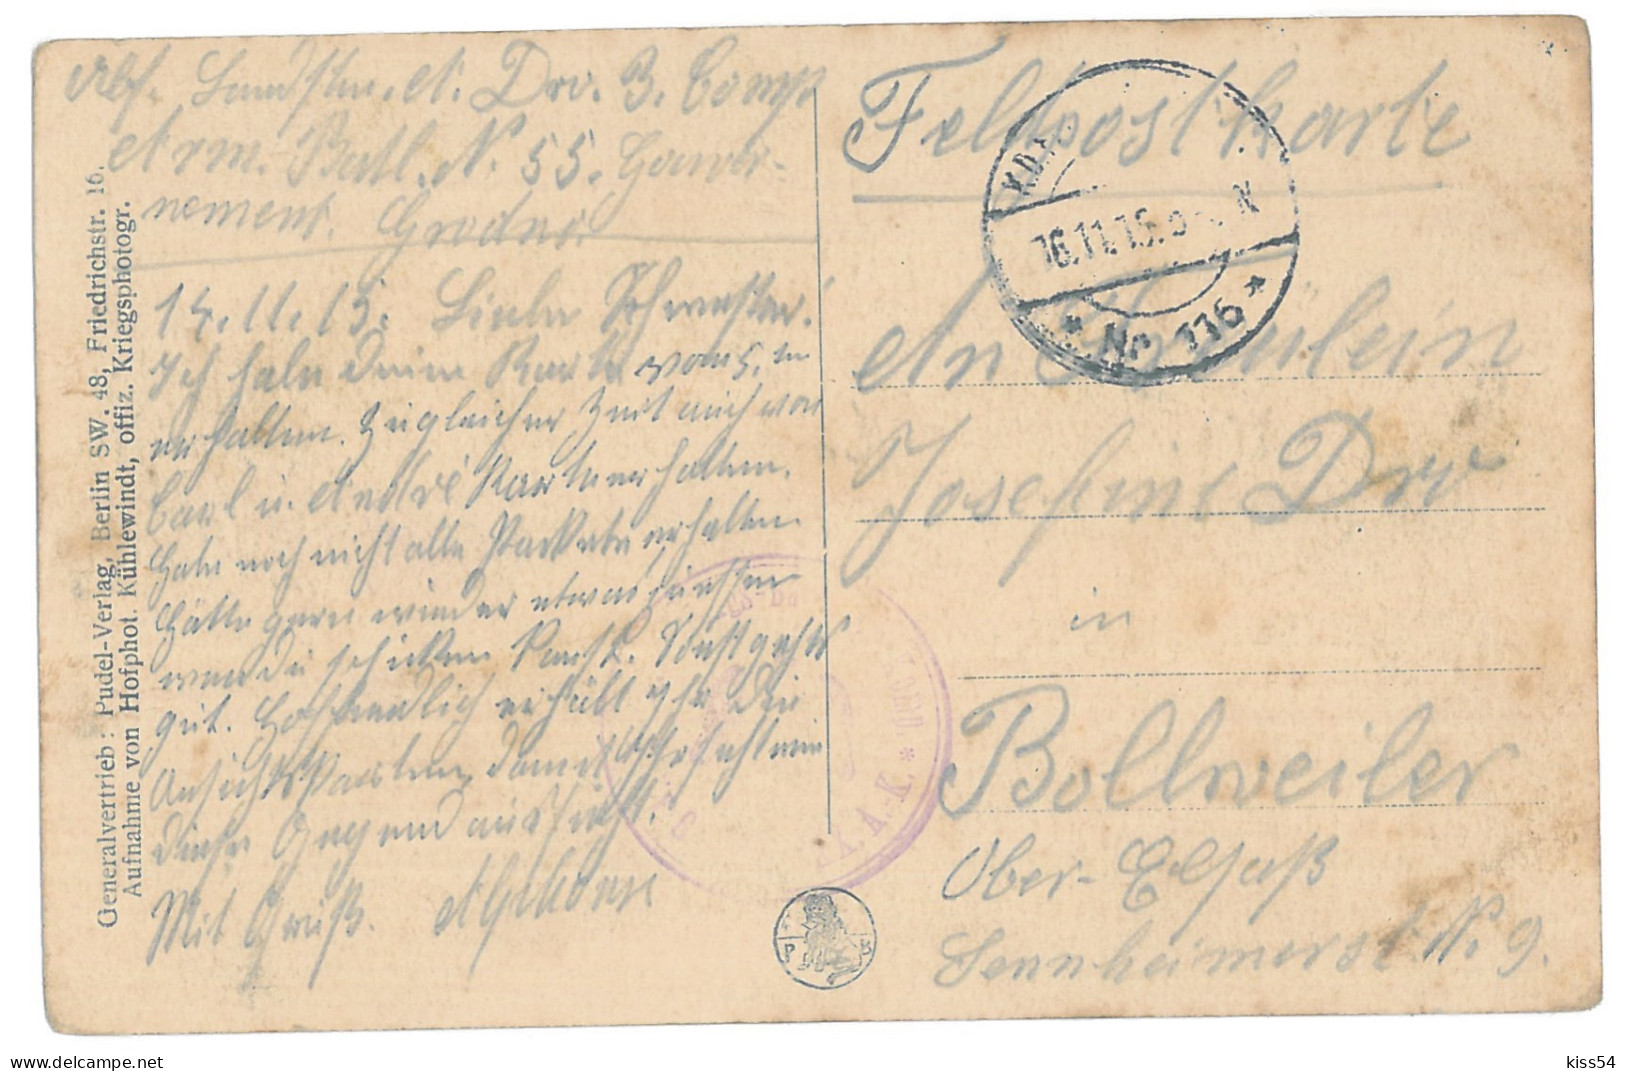 BL 28 - 14633 GRODNO, Railway Station, Bombed, Belarus - Old Postcard, CENSOR - Used - 1915 - Bielorussia